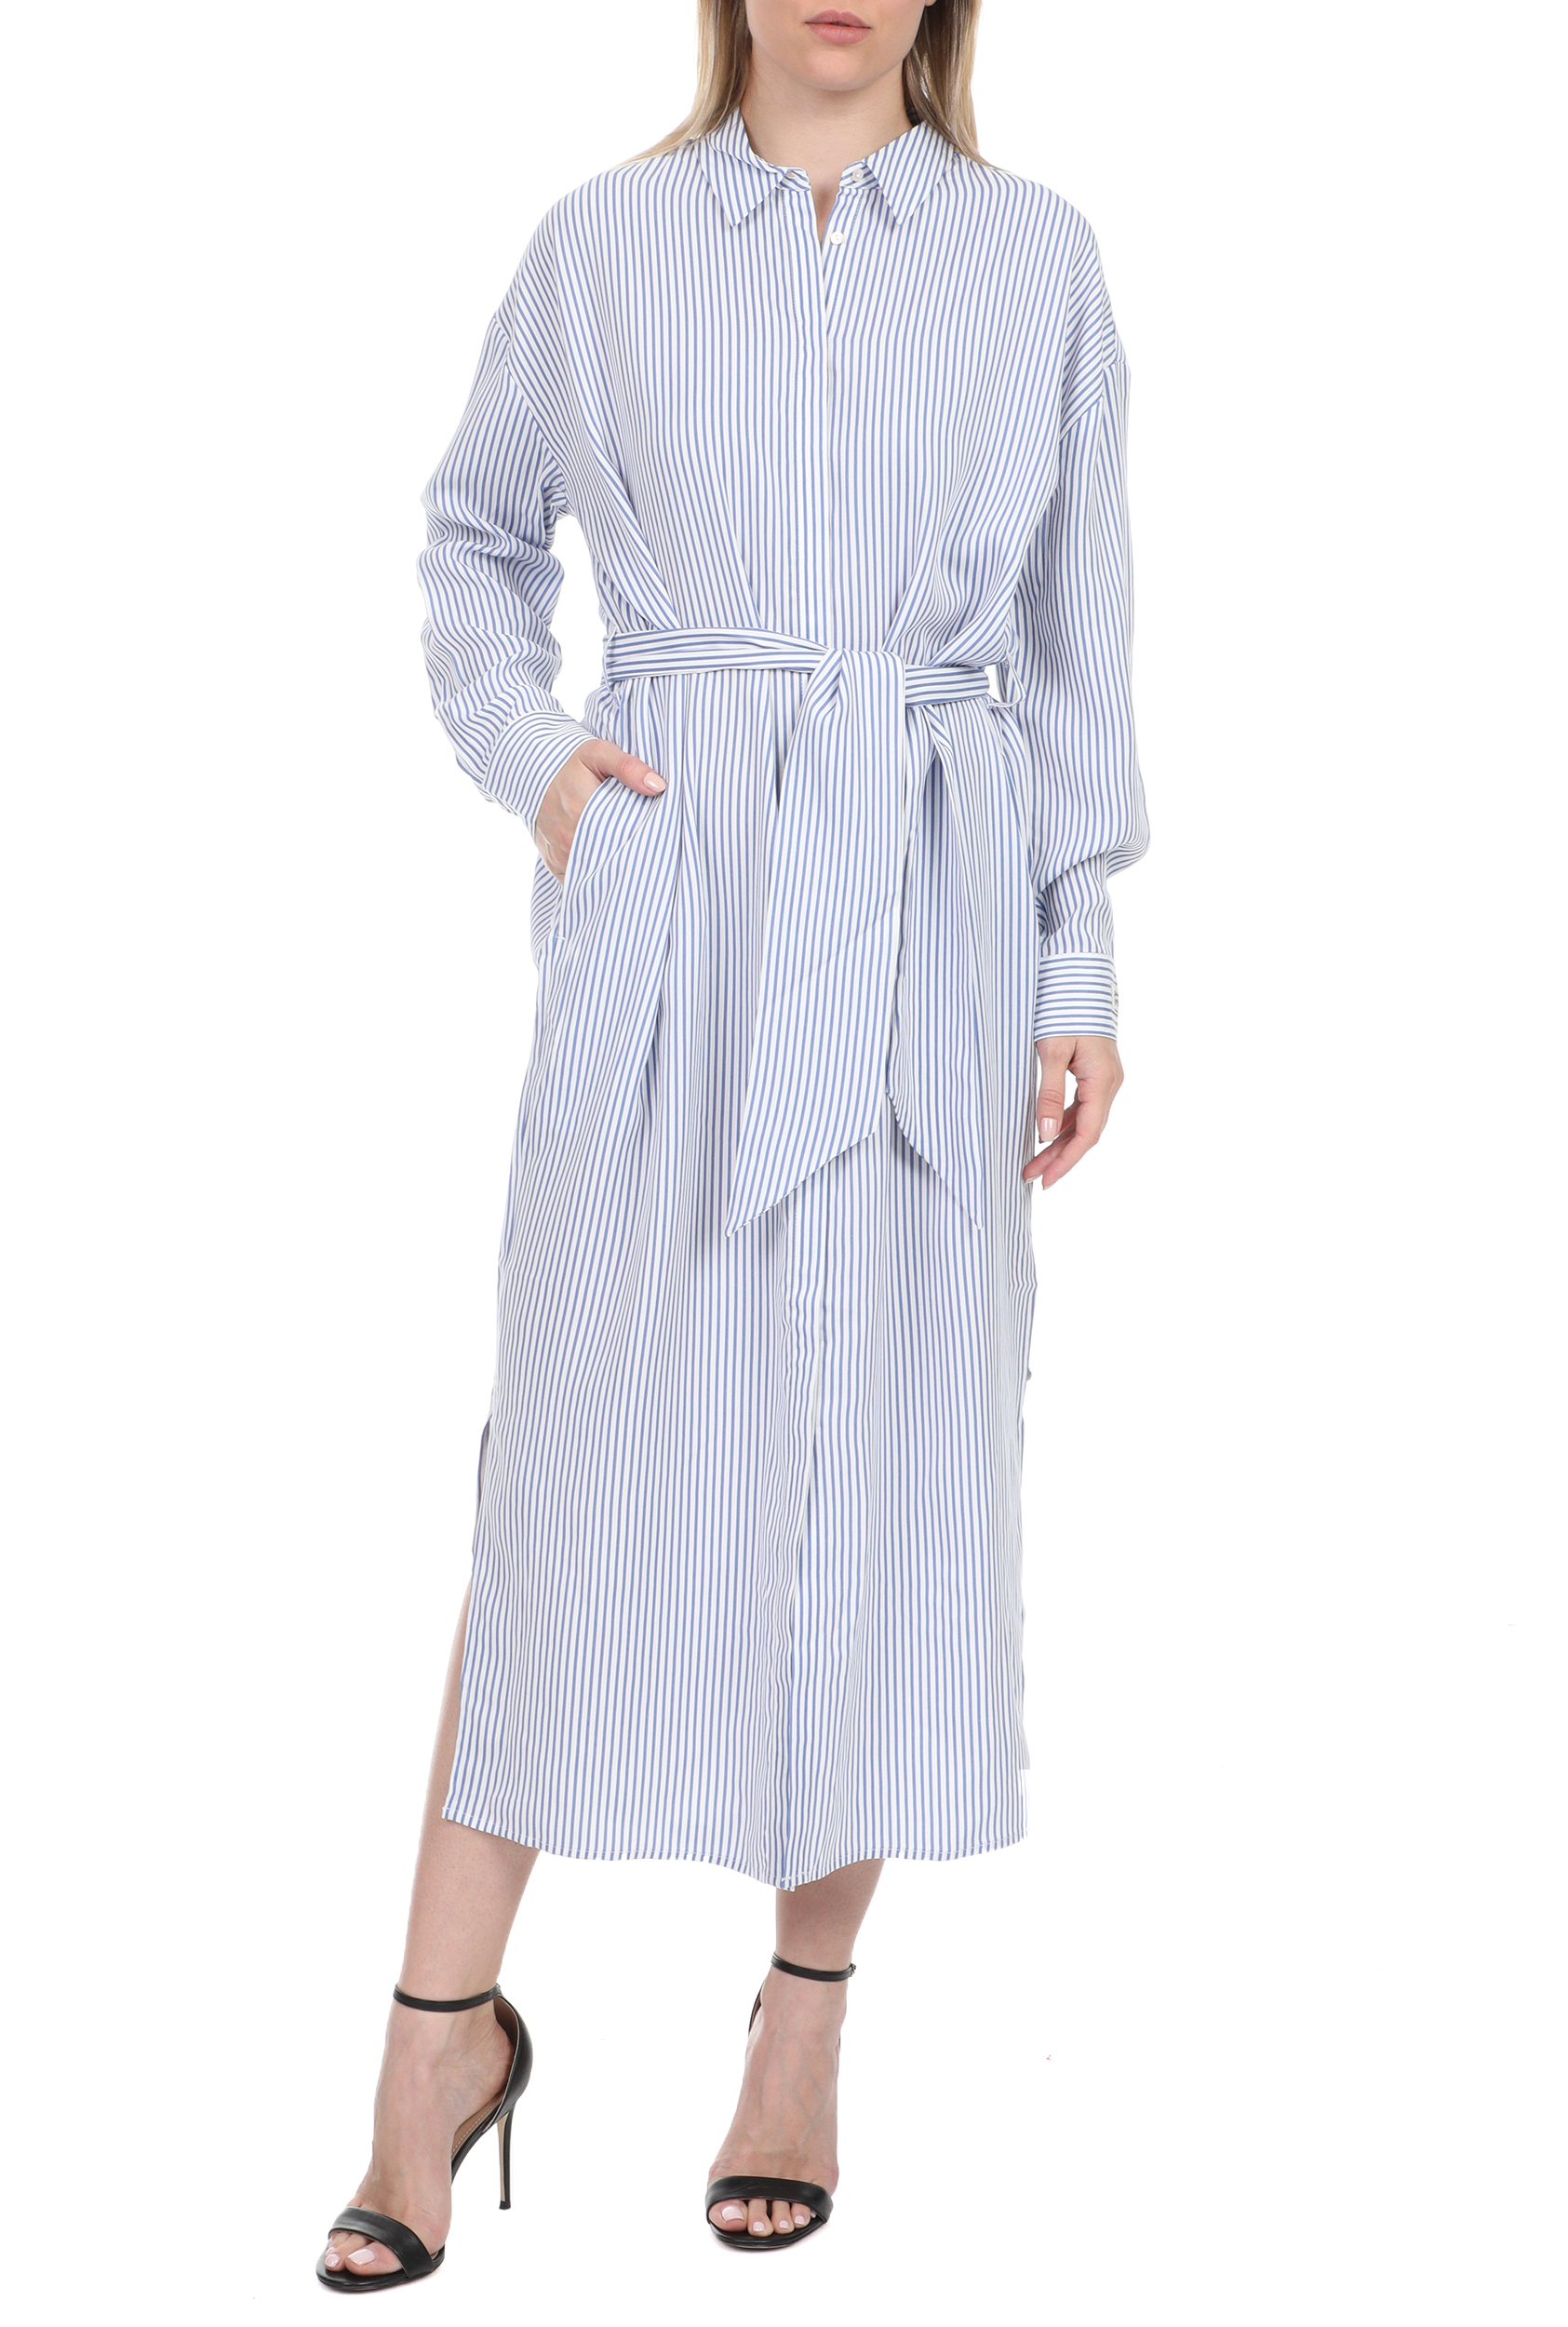 SCOTCH & SODA SCOTCH & SODA - Γυναικείο μακρύ φόρεμα SCOTCH & SODA μπλε λευκό